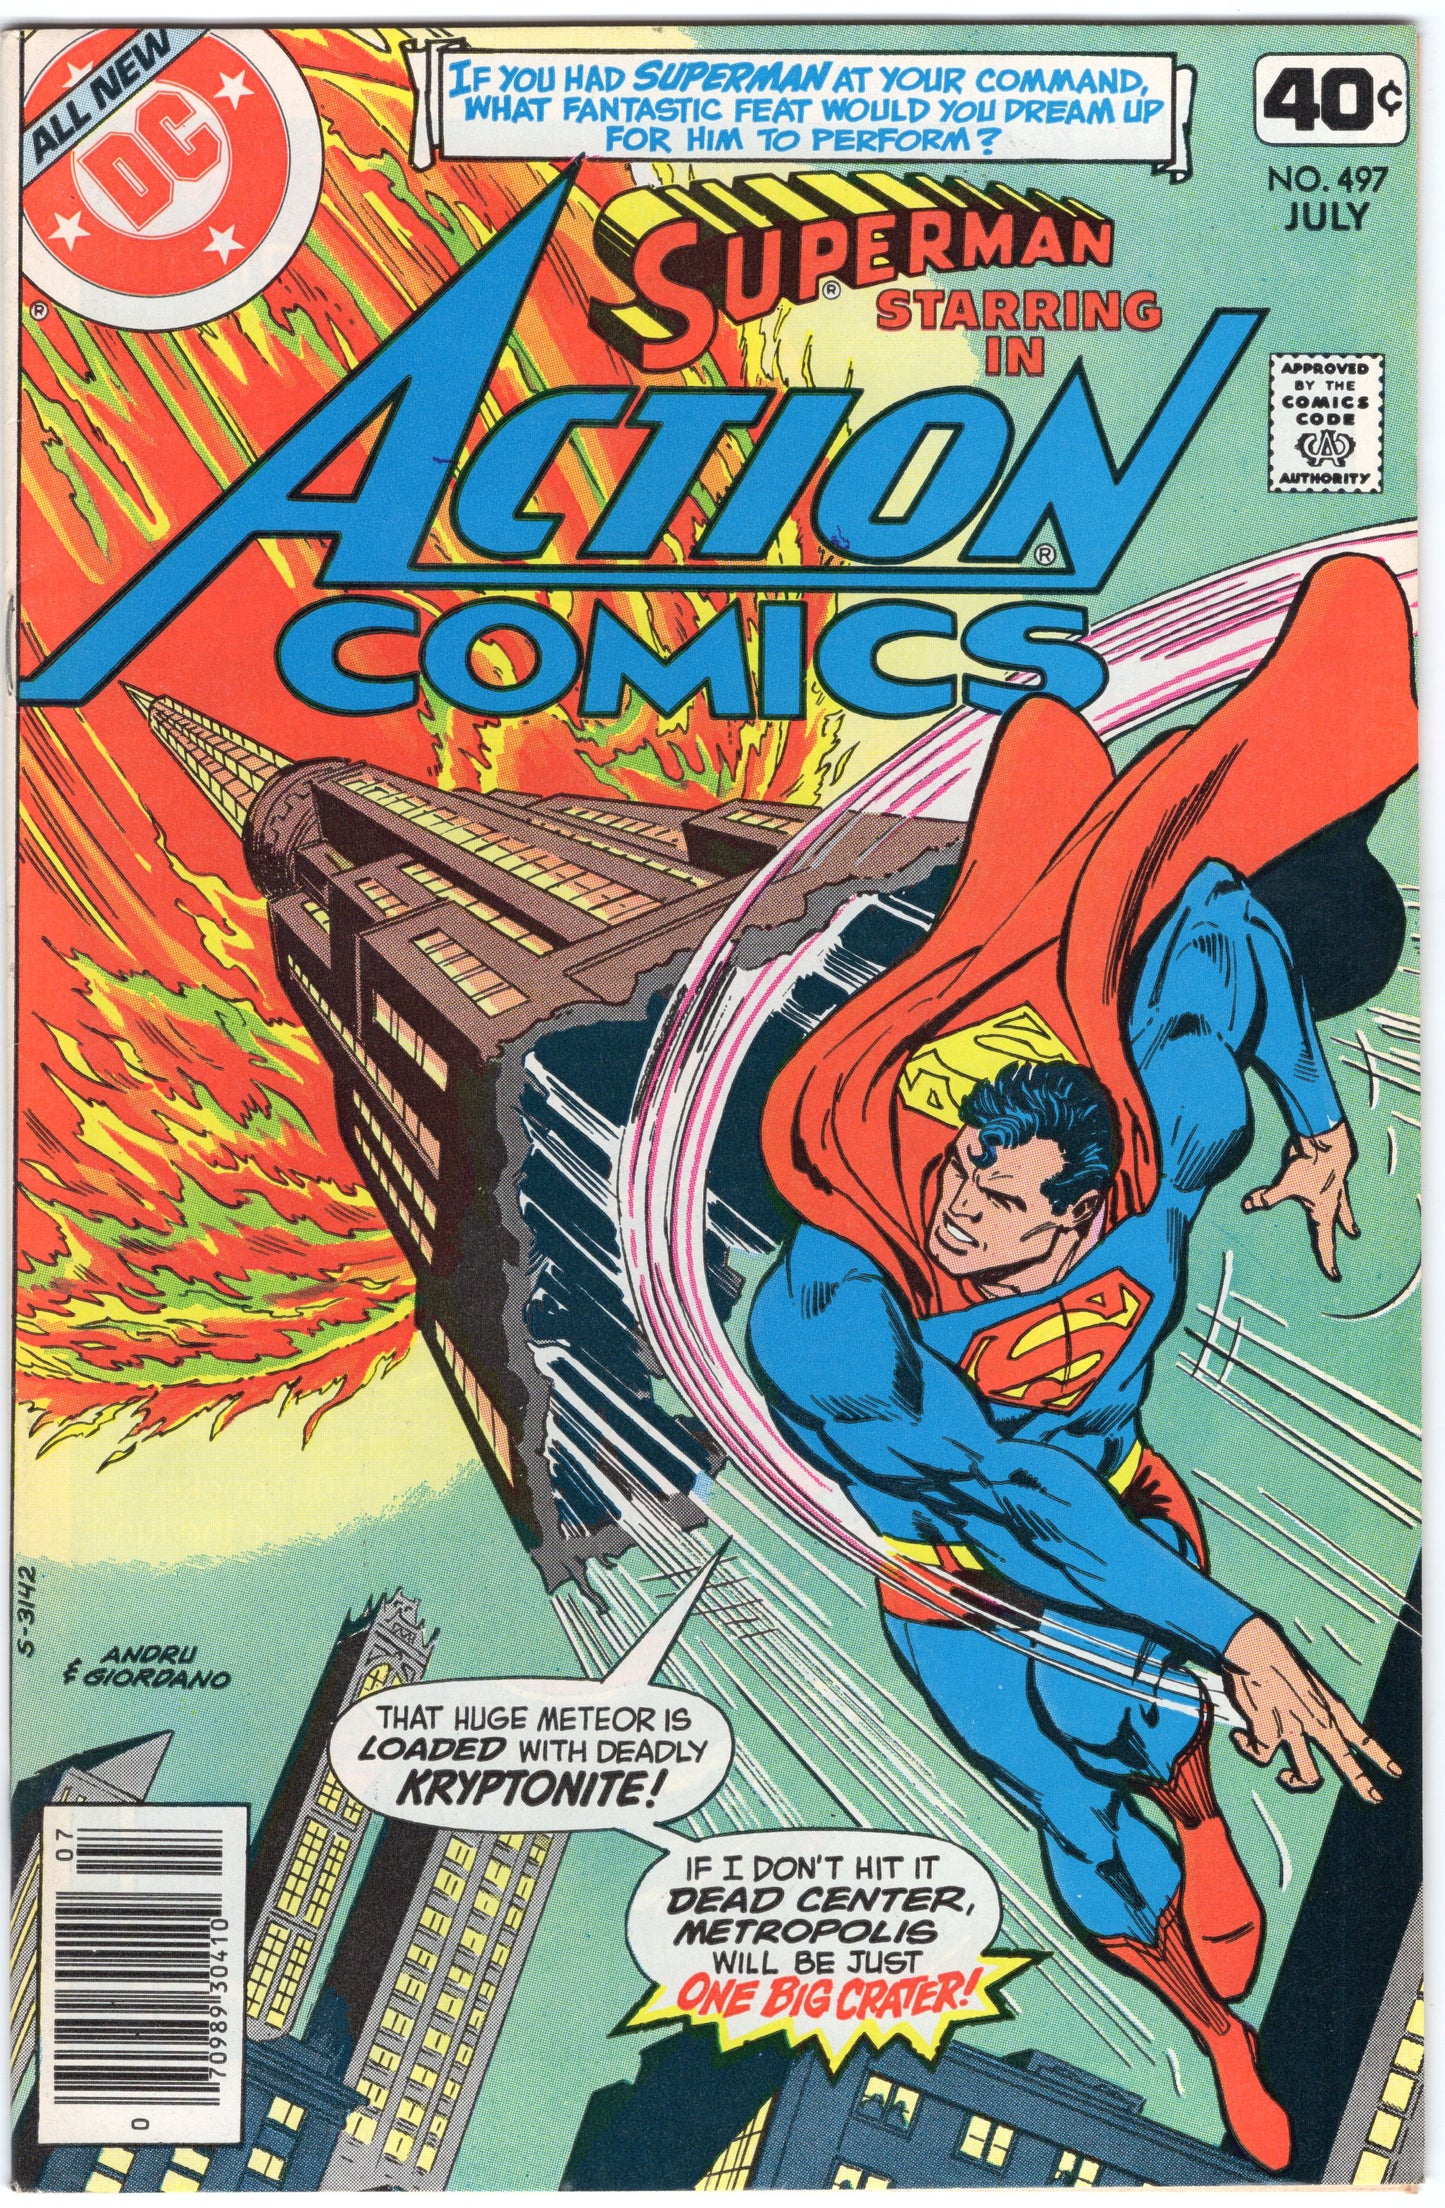 Action Comics (Superman) - Issue #497 (July, 1979 - DC Comics) VF